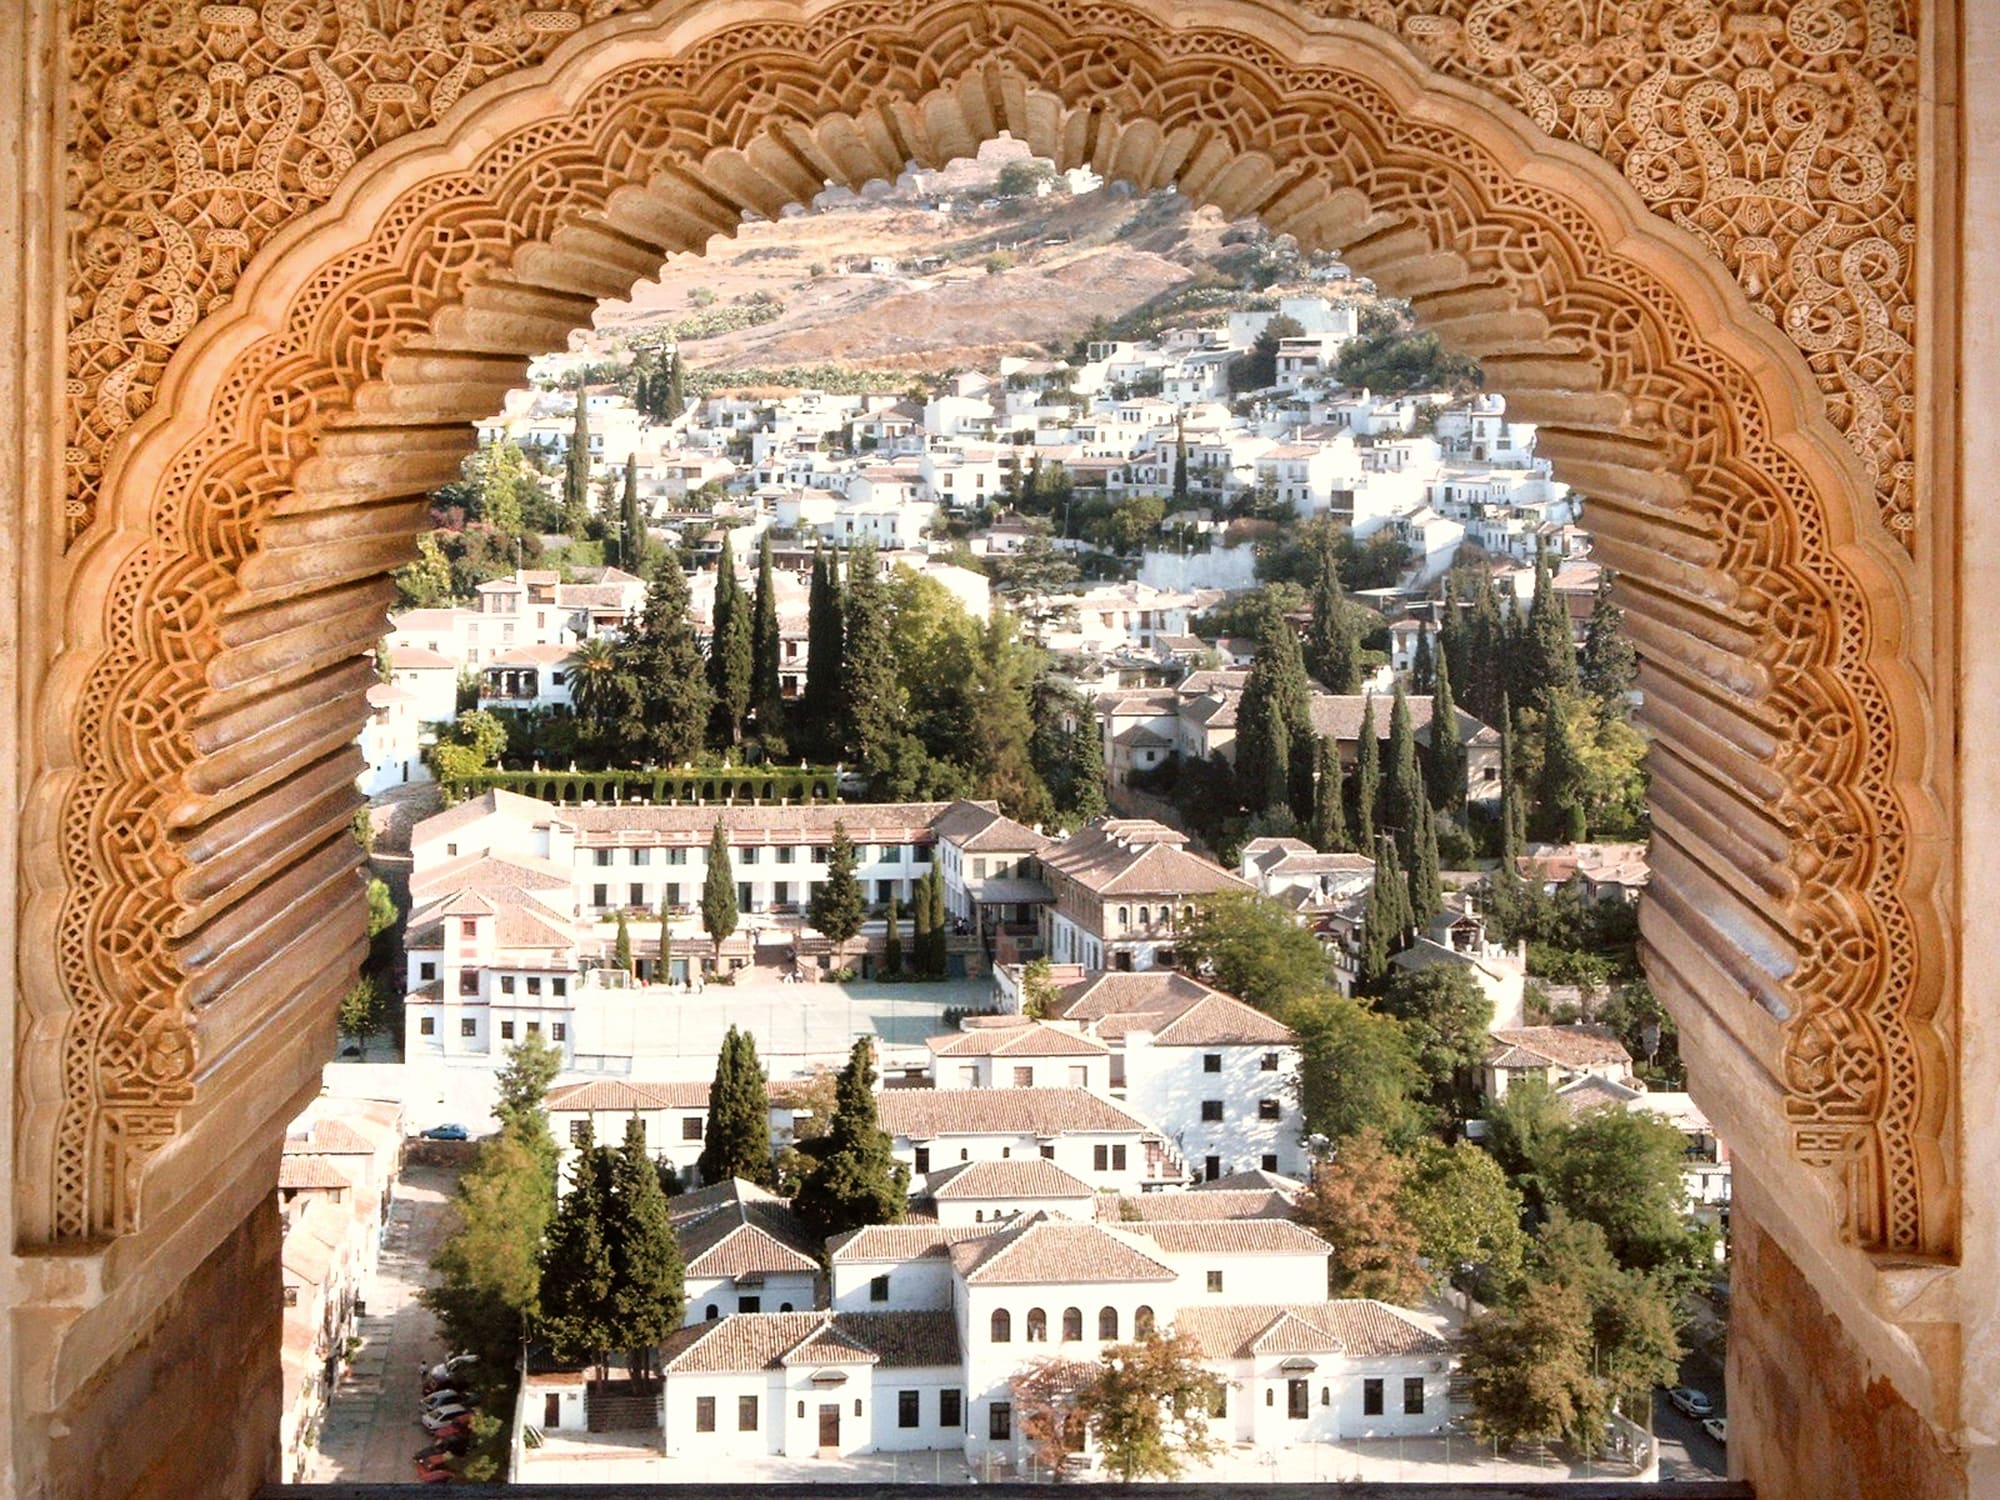 Window of the Alhambra facing the Albaicin Quarter